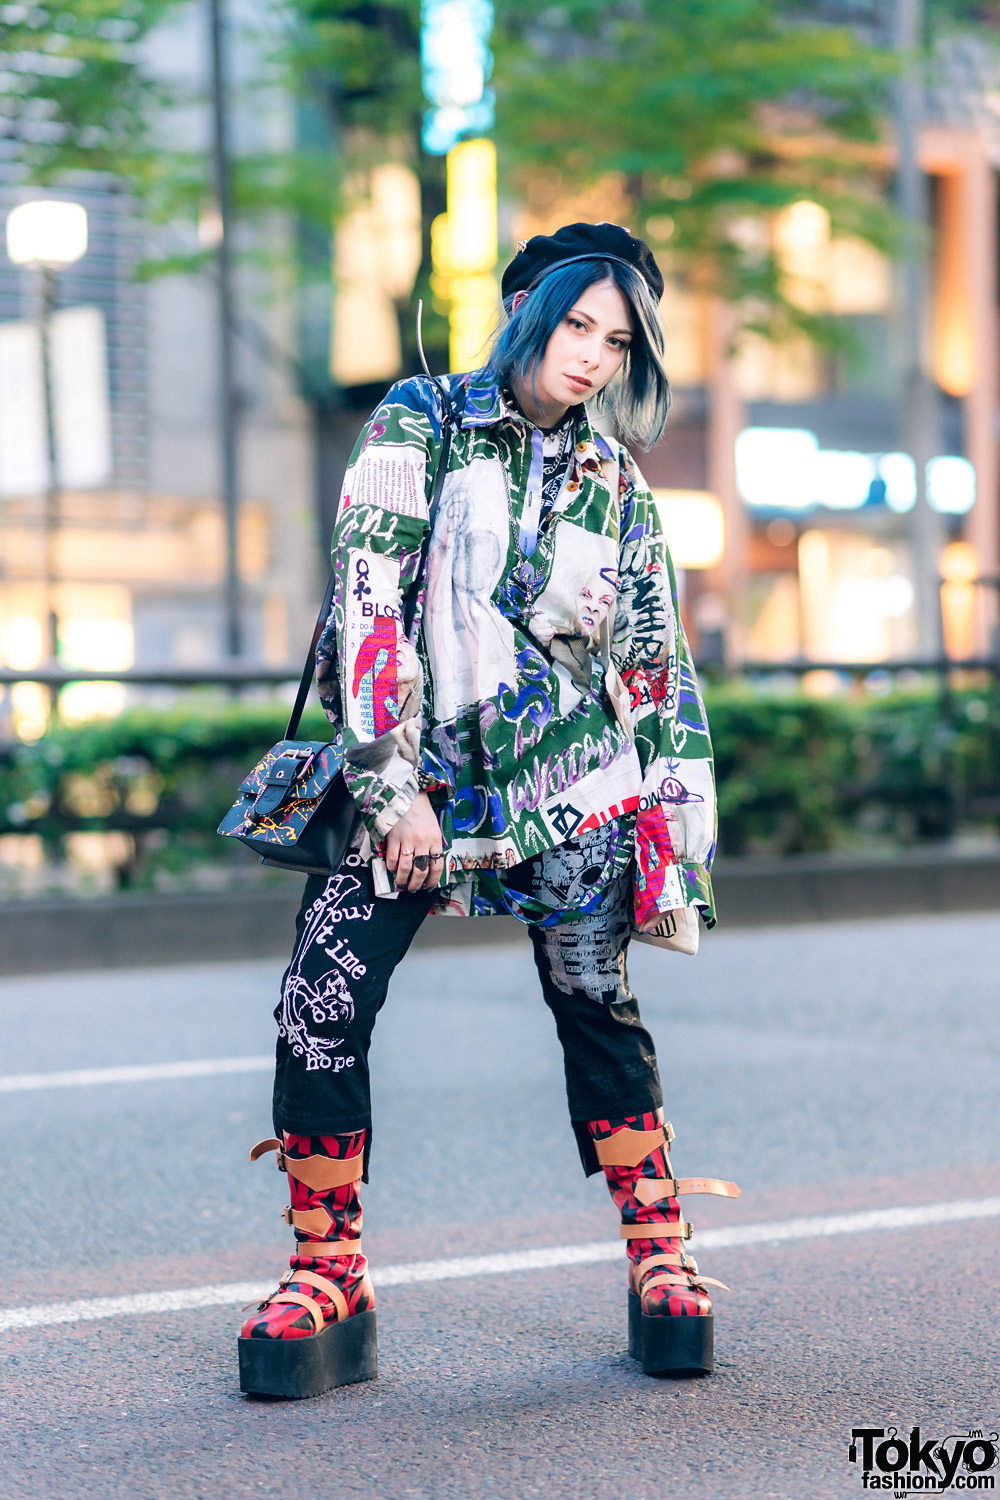 Japanese Pop Idol, Model & Cosplayer in Graphic Streetwear w/ Teal Hair, Hellcat Punks Beret, Punkidz, H.Naoto & Vivienne Westwood x Buffalo Printed Platform Boots – Tokyo Fashion